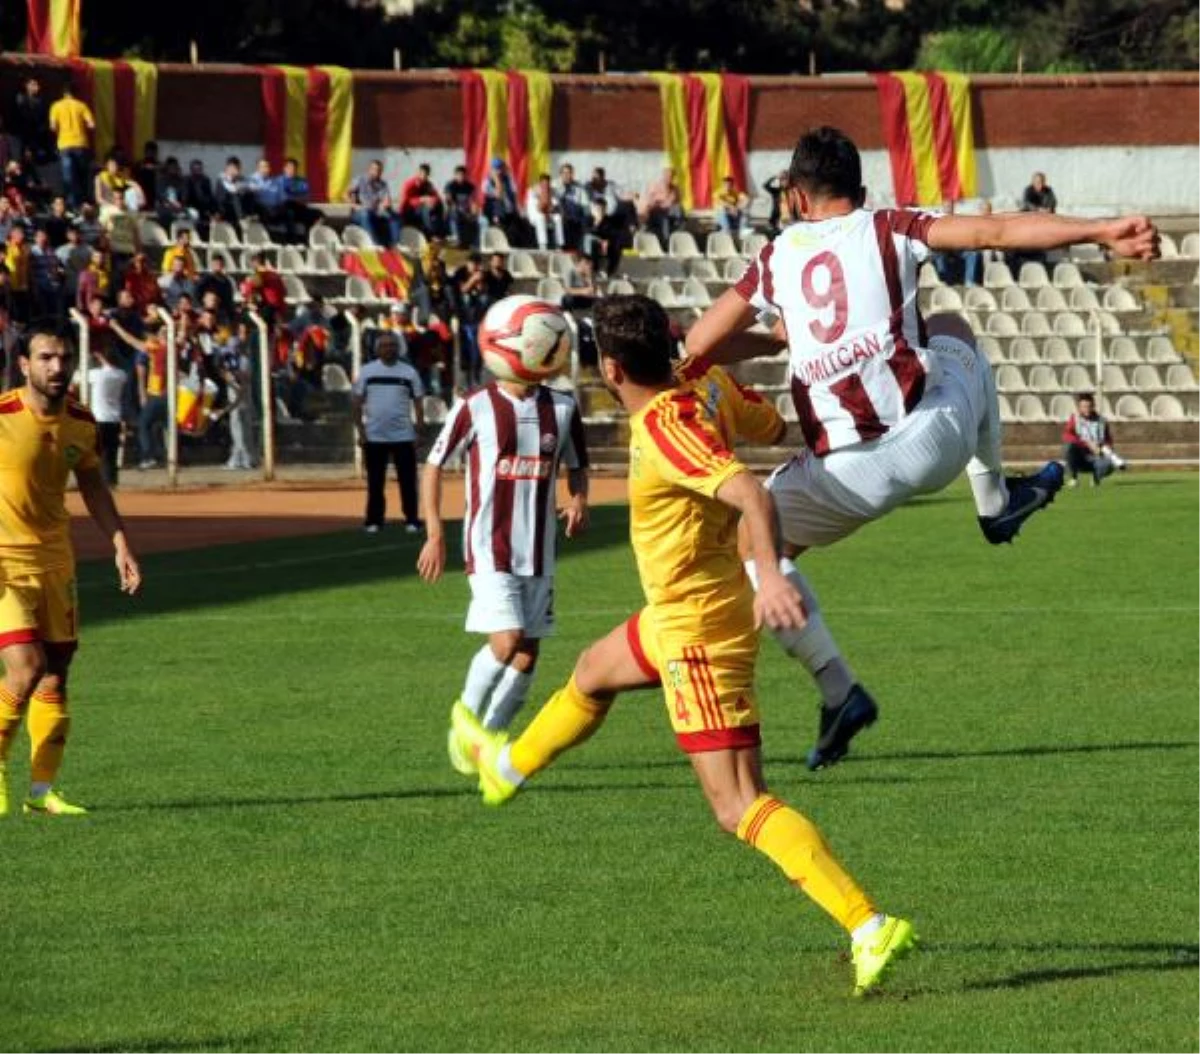 Tokatspor-Yeni Malatyaspor: 1-3